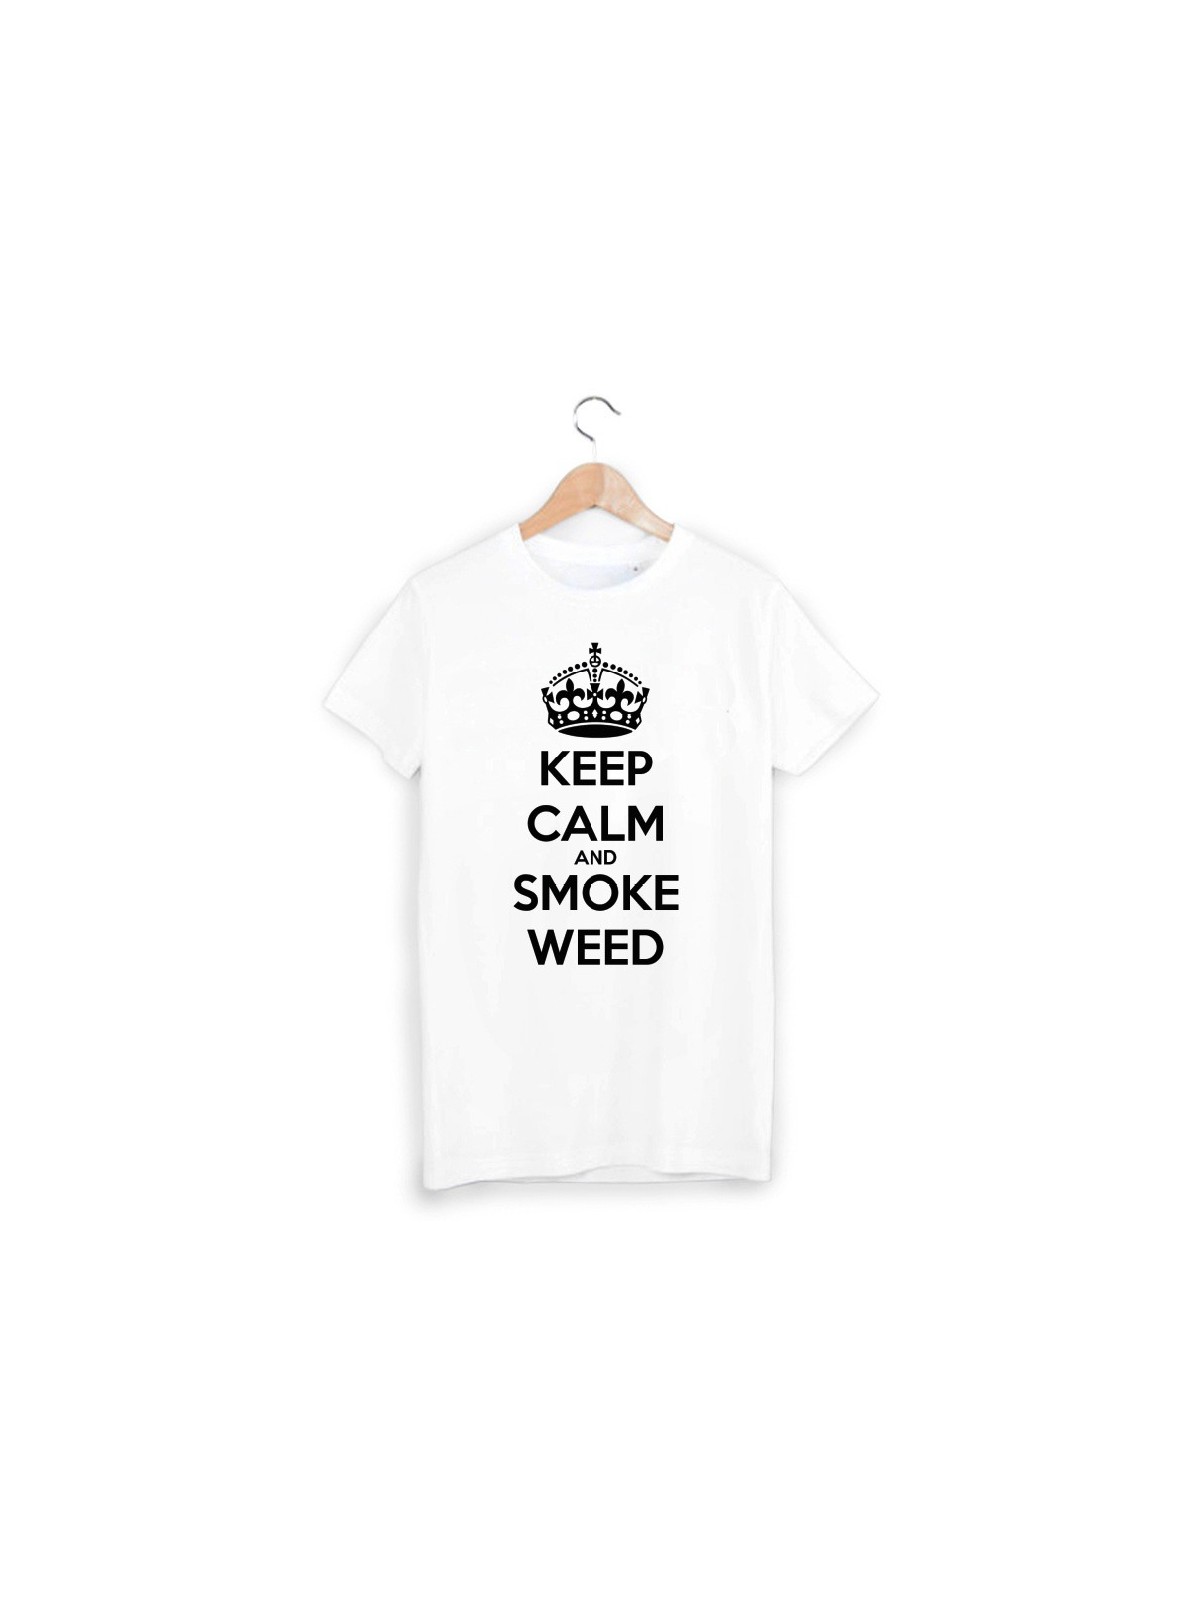 T-Shirt keep calm ref 882